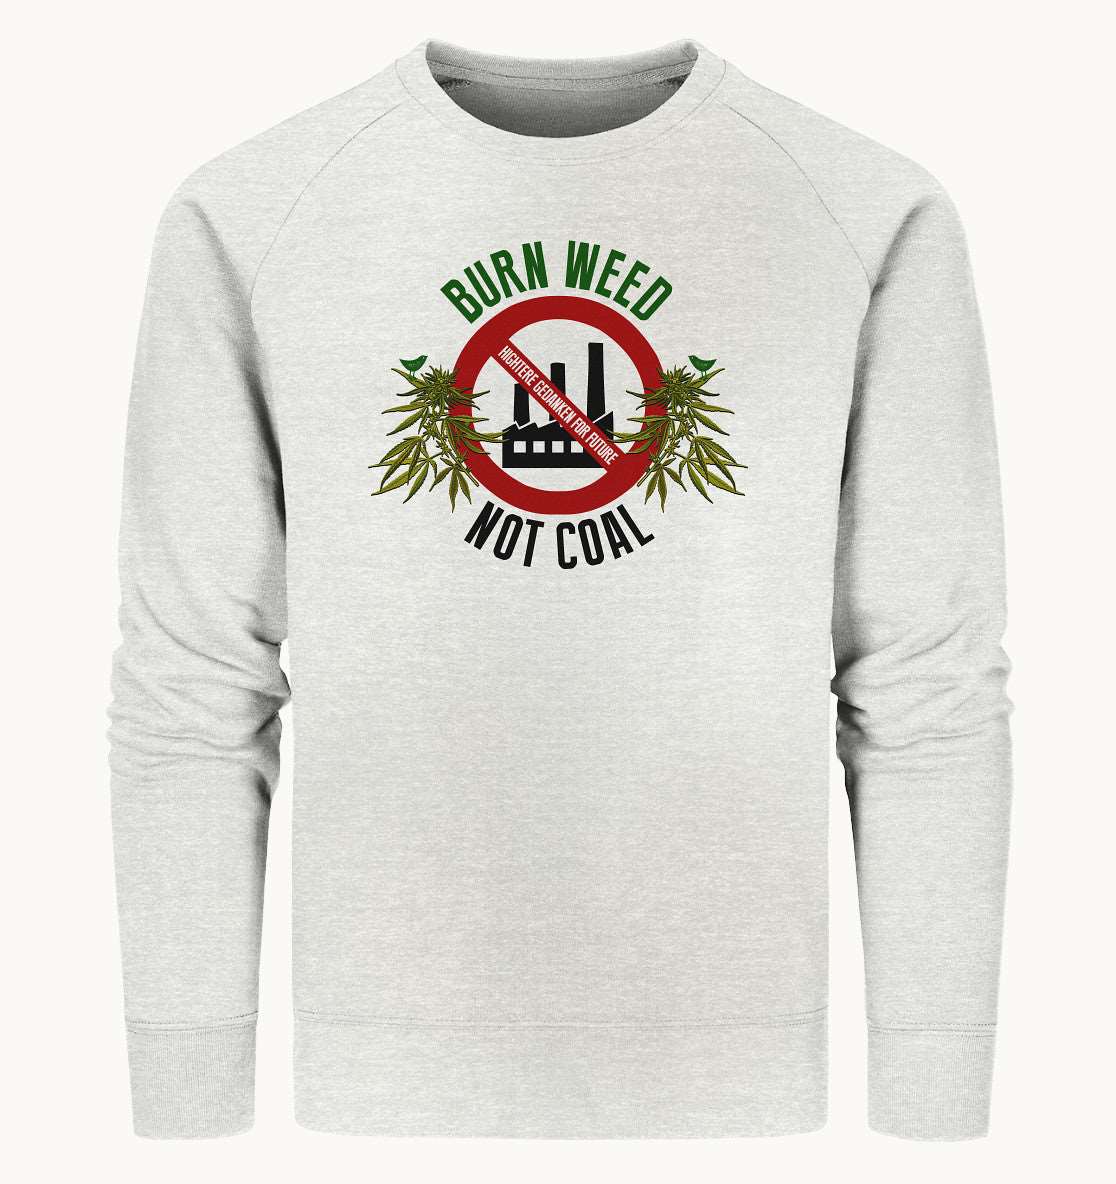 Burn weed not coal - Organic Sweatshirt